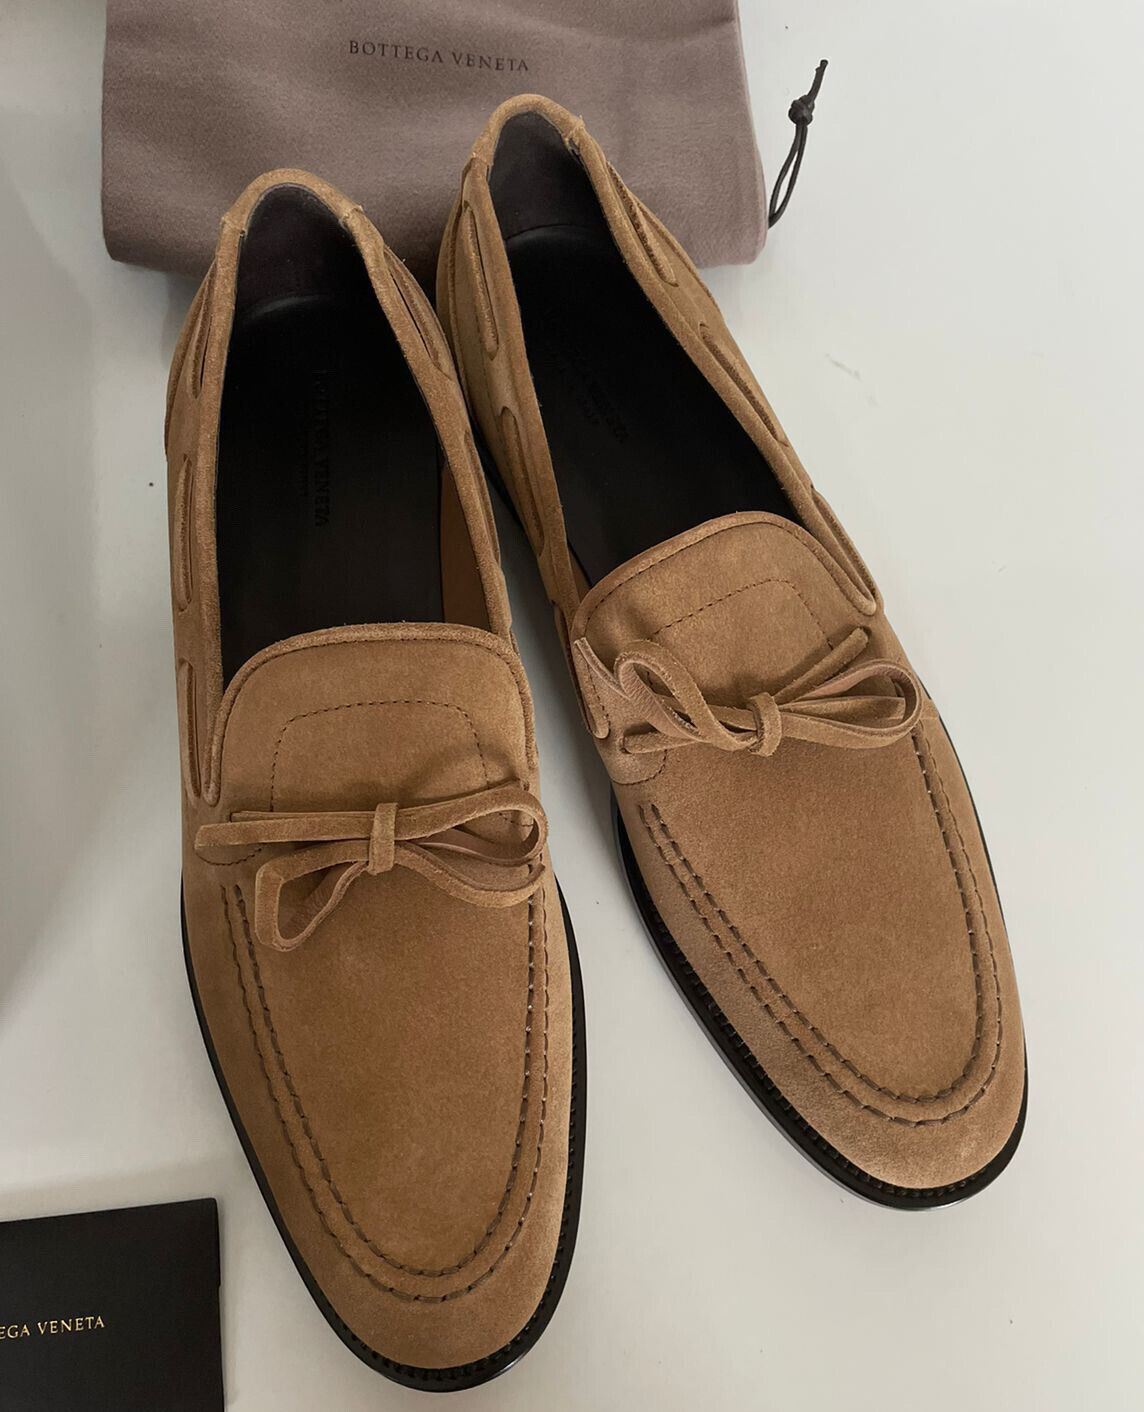 NIB $870 Bottega Veneta Men's Suede Shoes Camel 10.5 US (43.5 Euro) 522283 IT